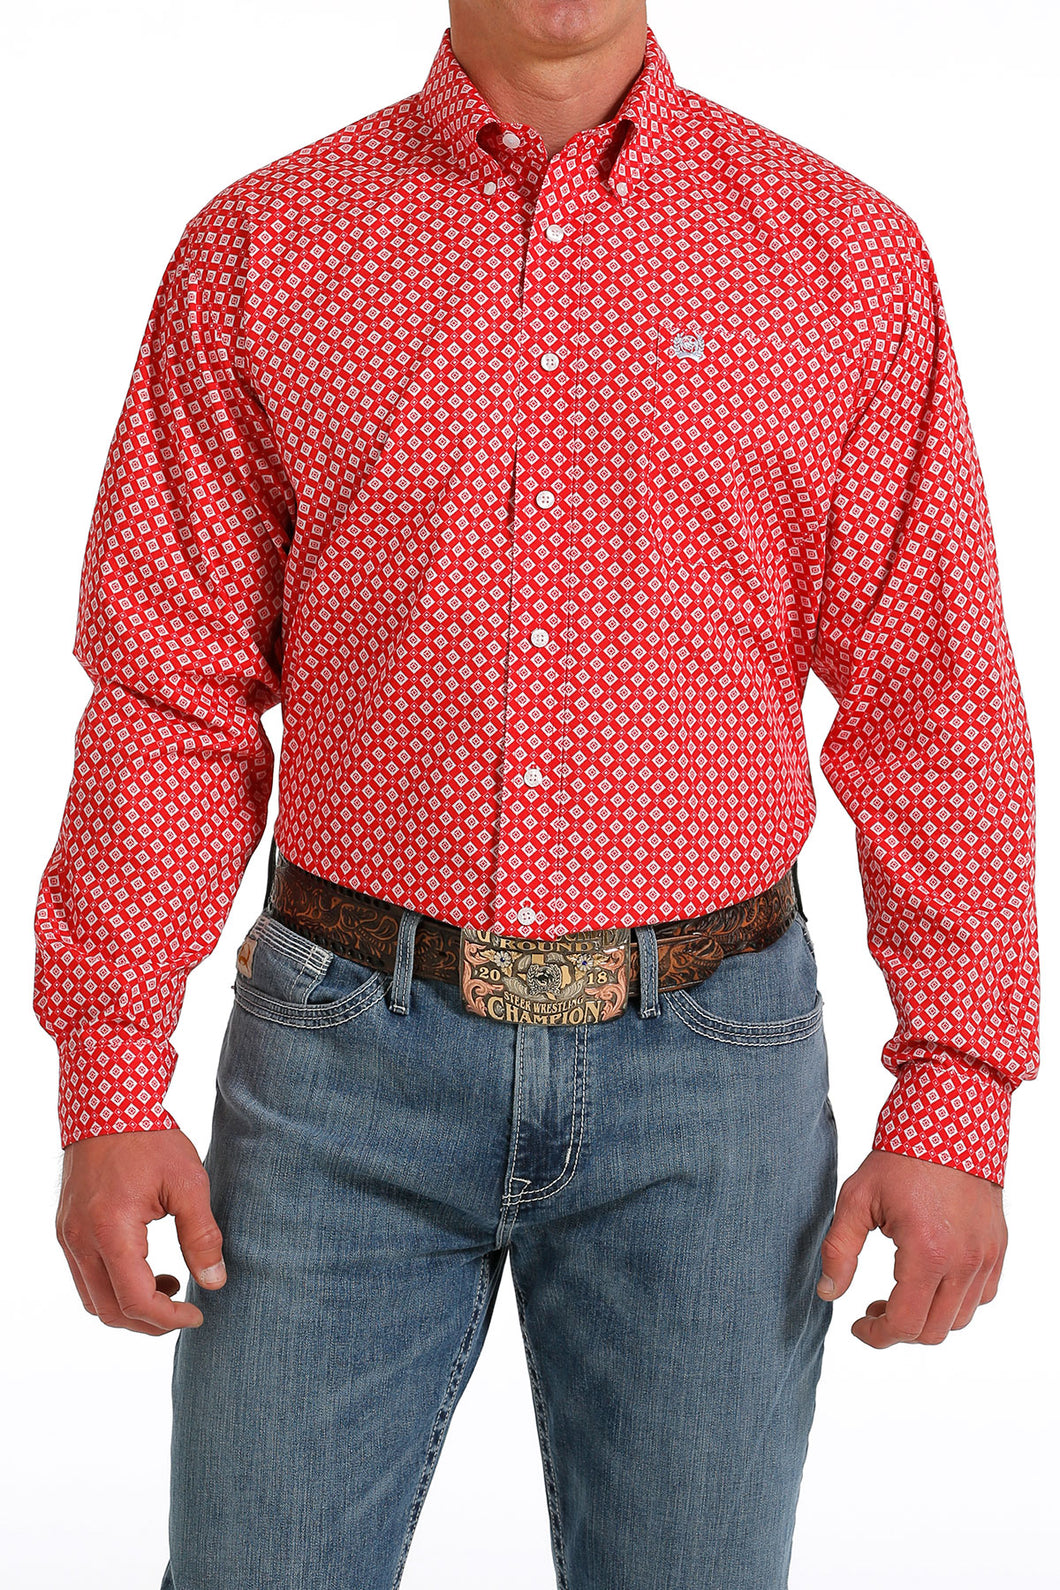 Pard's Western Shop Cinch Men's Bright Red/White Diamond Print Button-Down Shirt